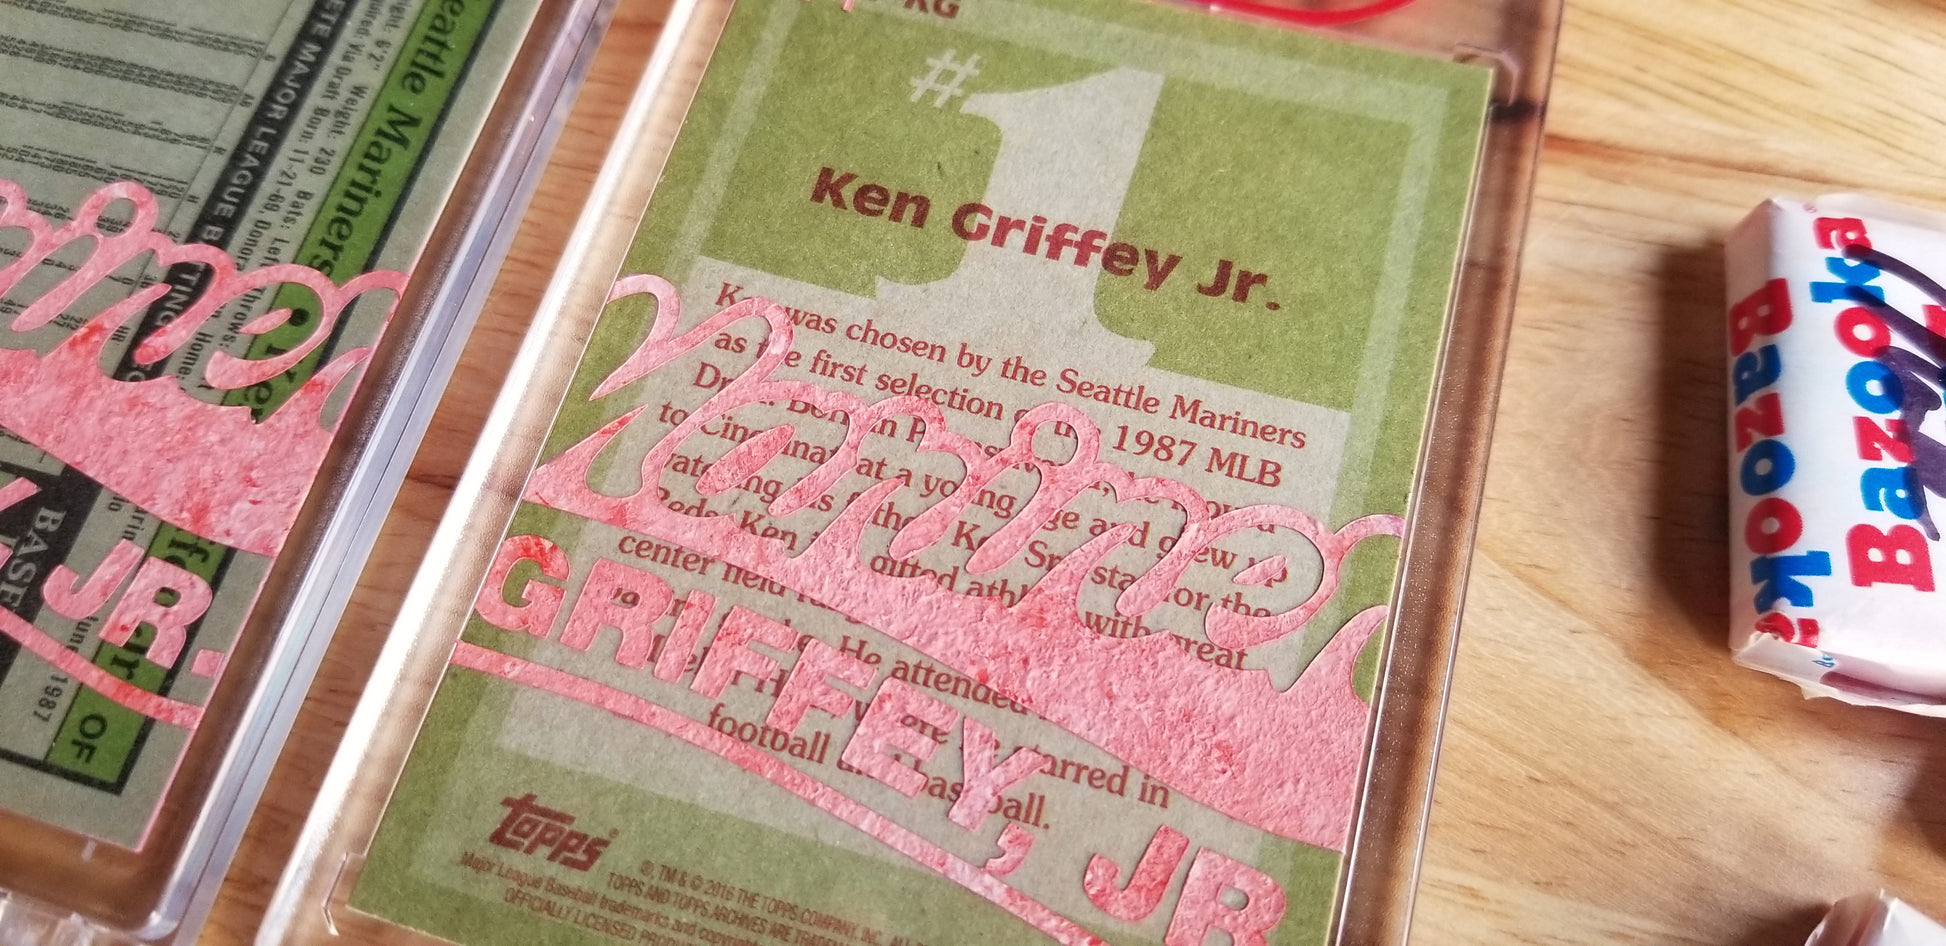 Baseball card art by Matthew Lee Rosen (aka Matthew Rosen) - Ken Griffey Jr. 1989 Topps Traded